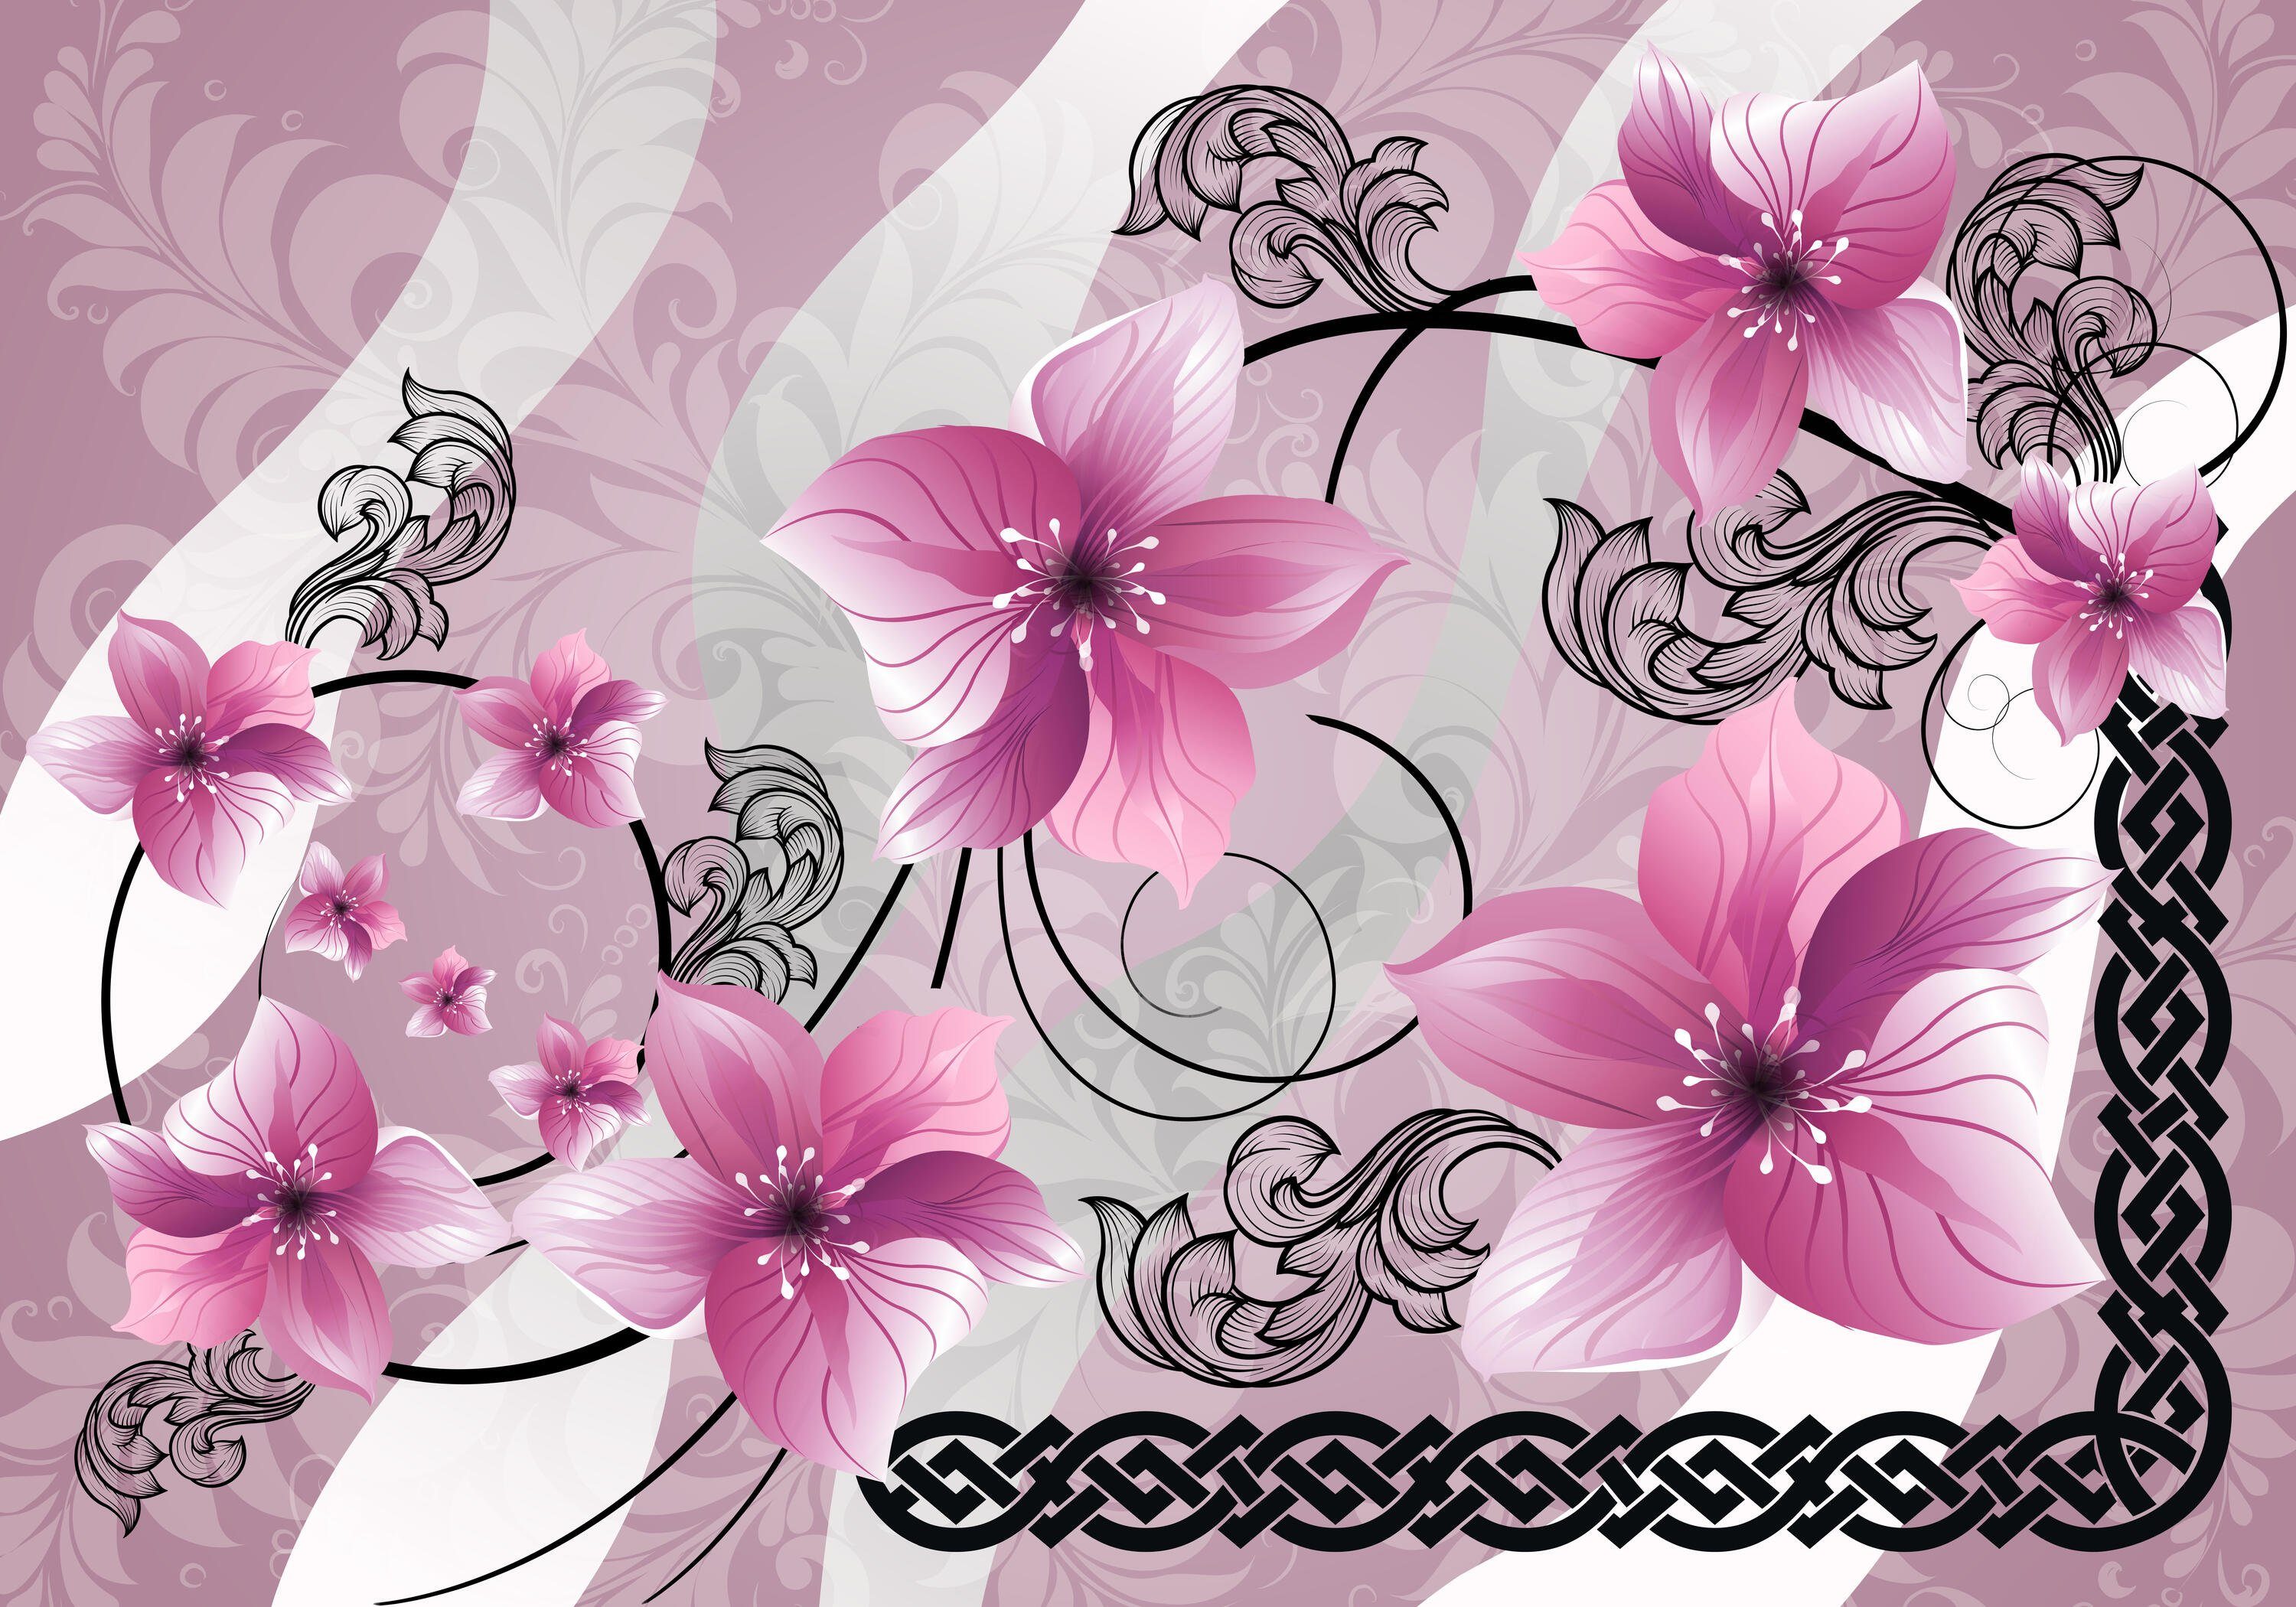 matt, rosa glatt, Fototapete wandmotiv24 Blüten Vliestapete Wandtapete, Motivtapete, Ornamente,